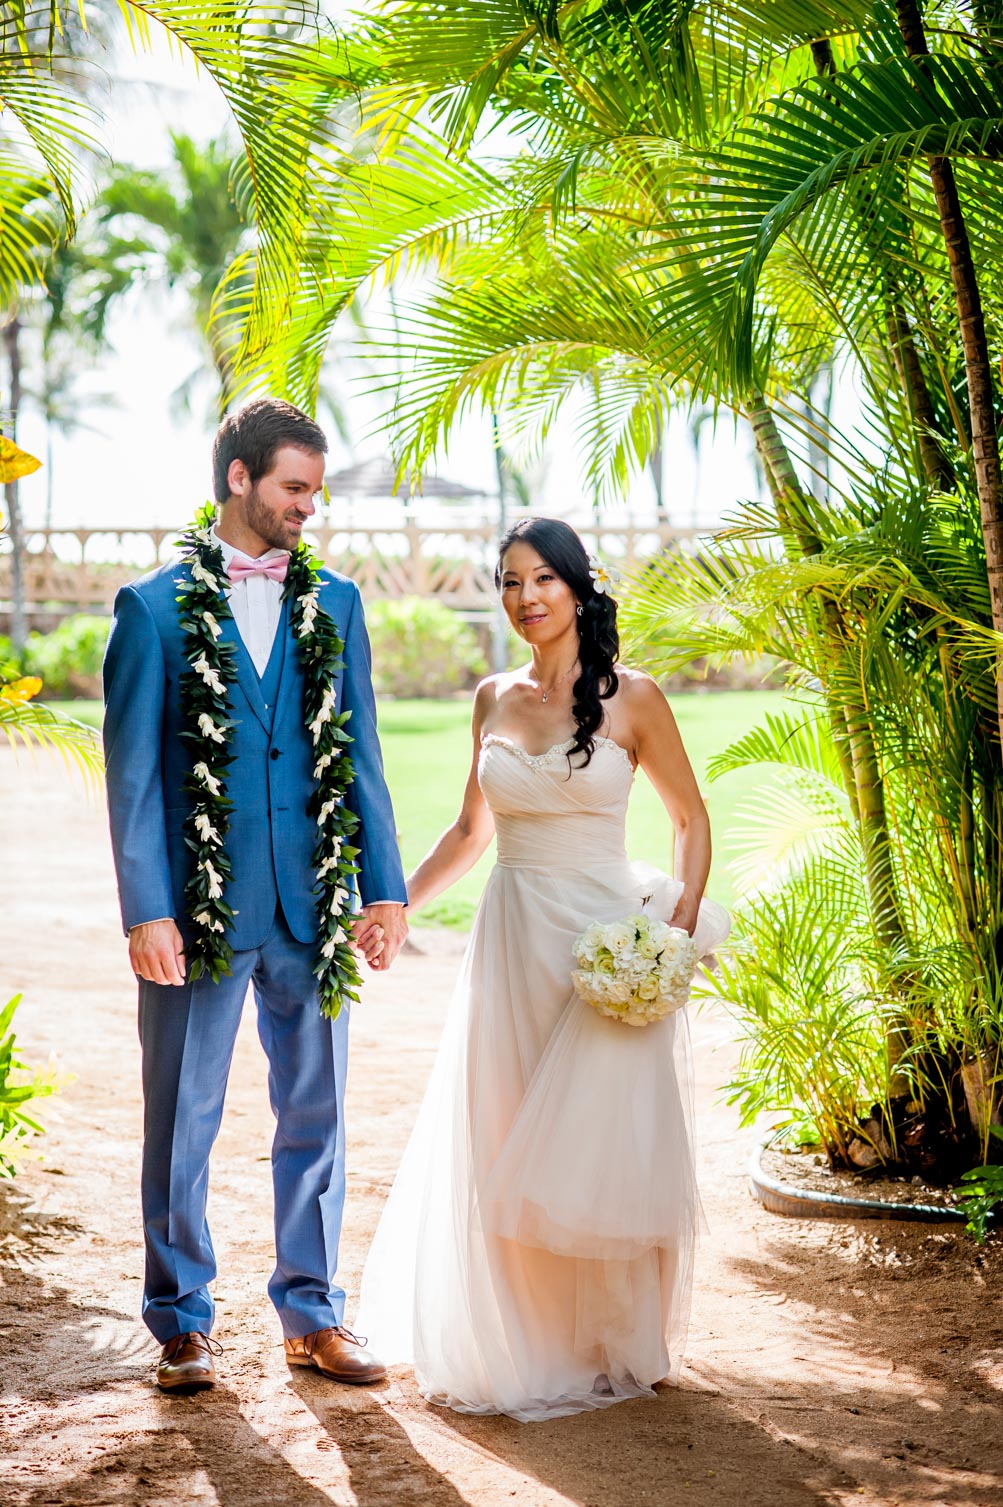 Hawaii wedding couple holding hands in lush greenery